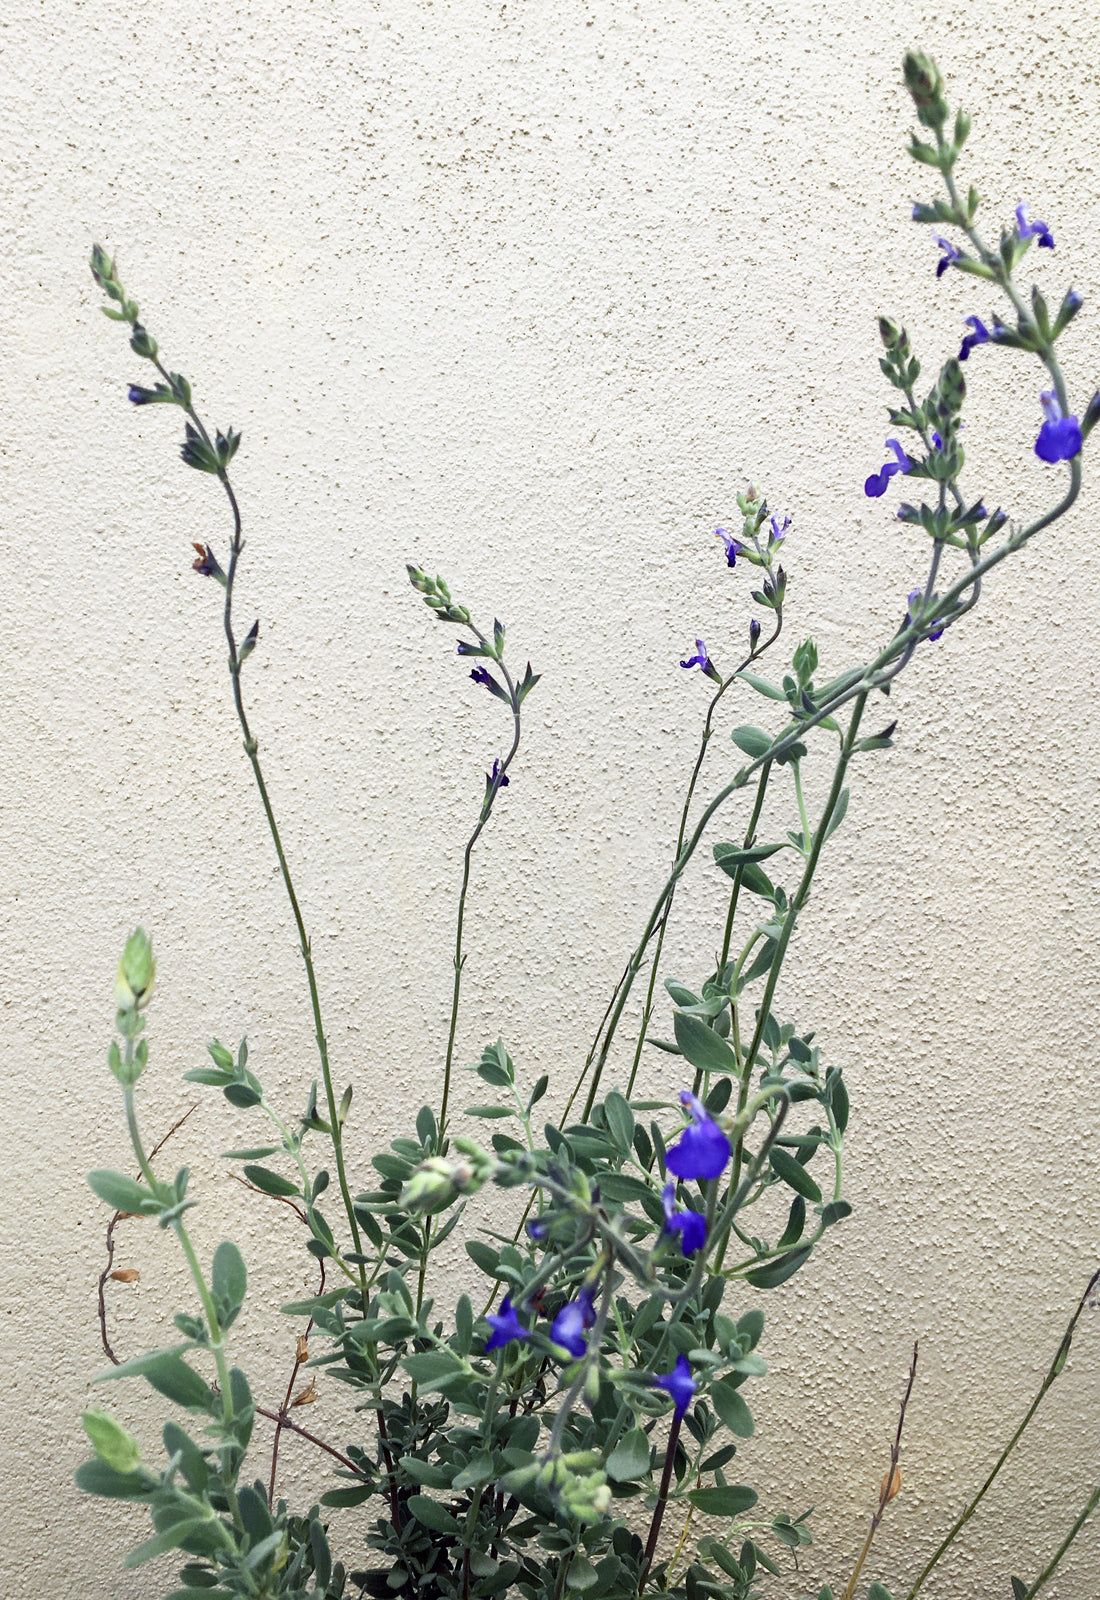 Salvia chamaedryoides (Germander Sage)